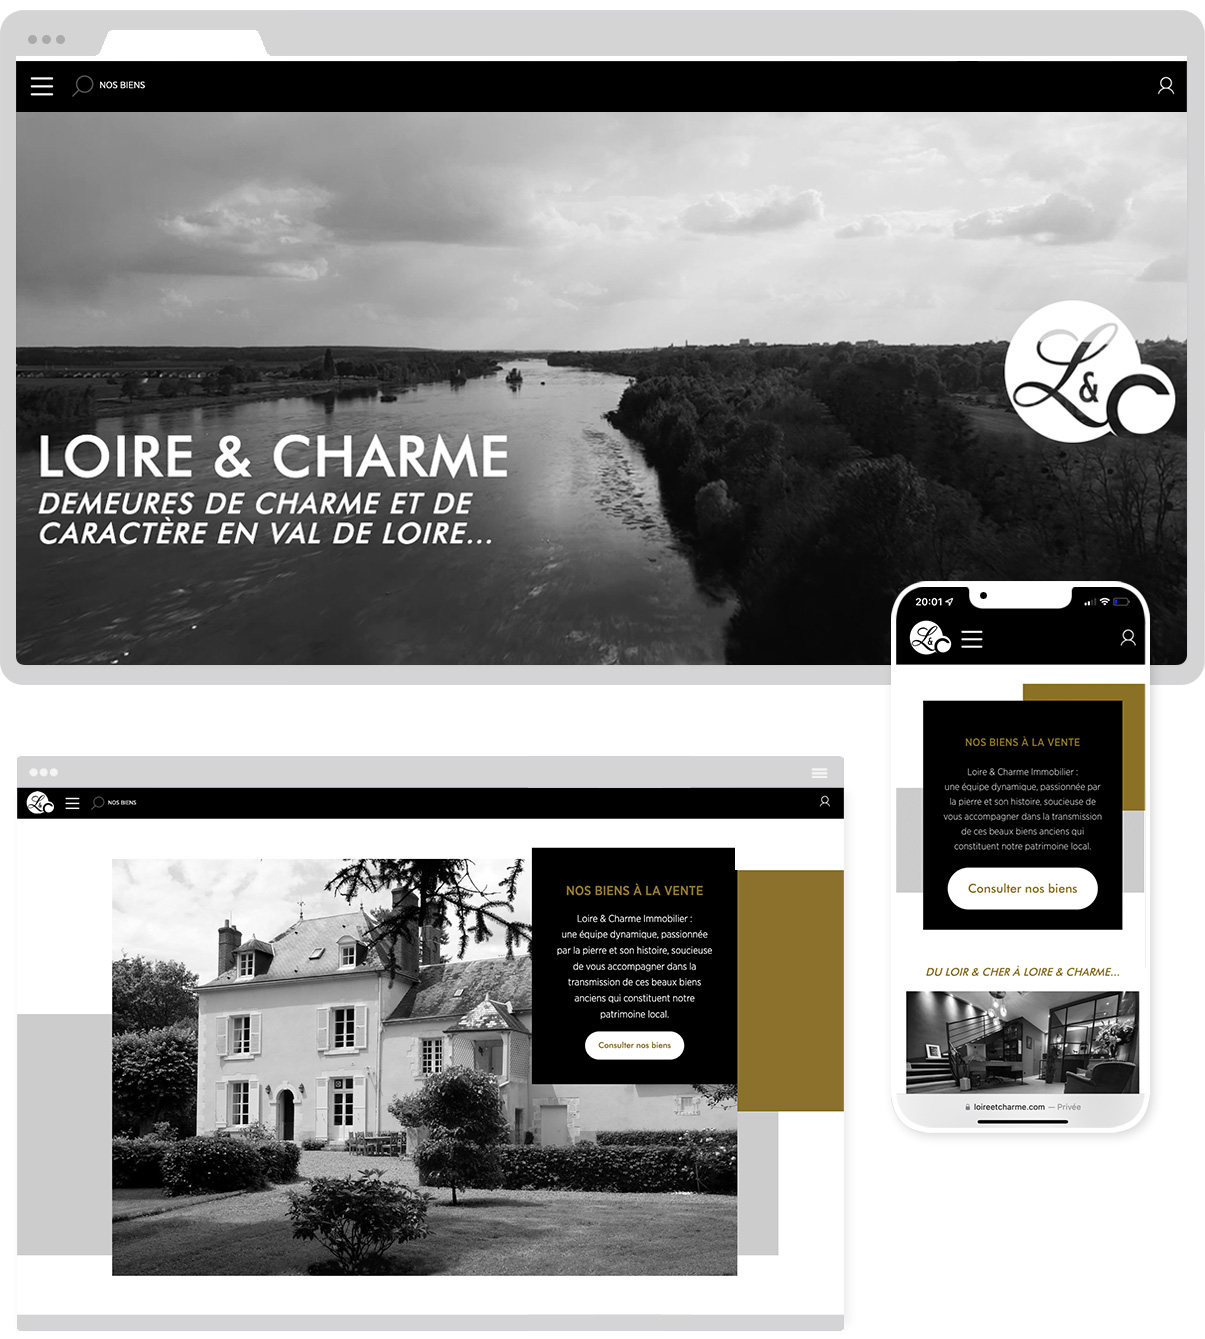 Loire et charme immobilier - Site internet - Responsive design - Homepage 